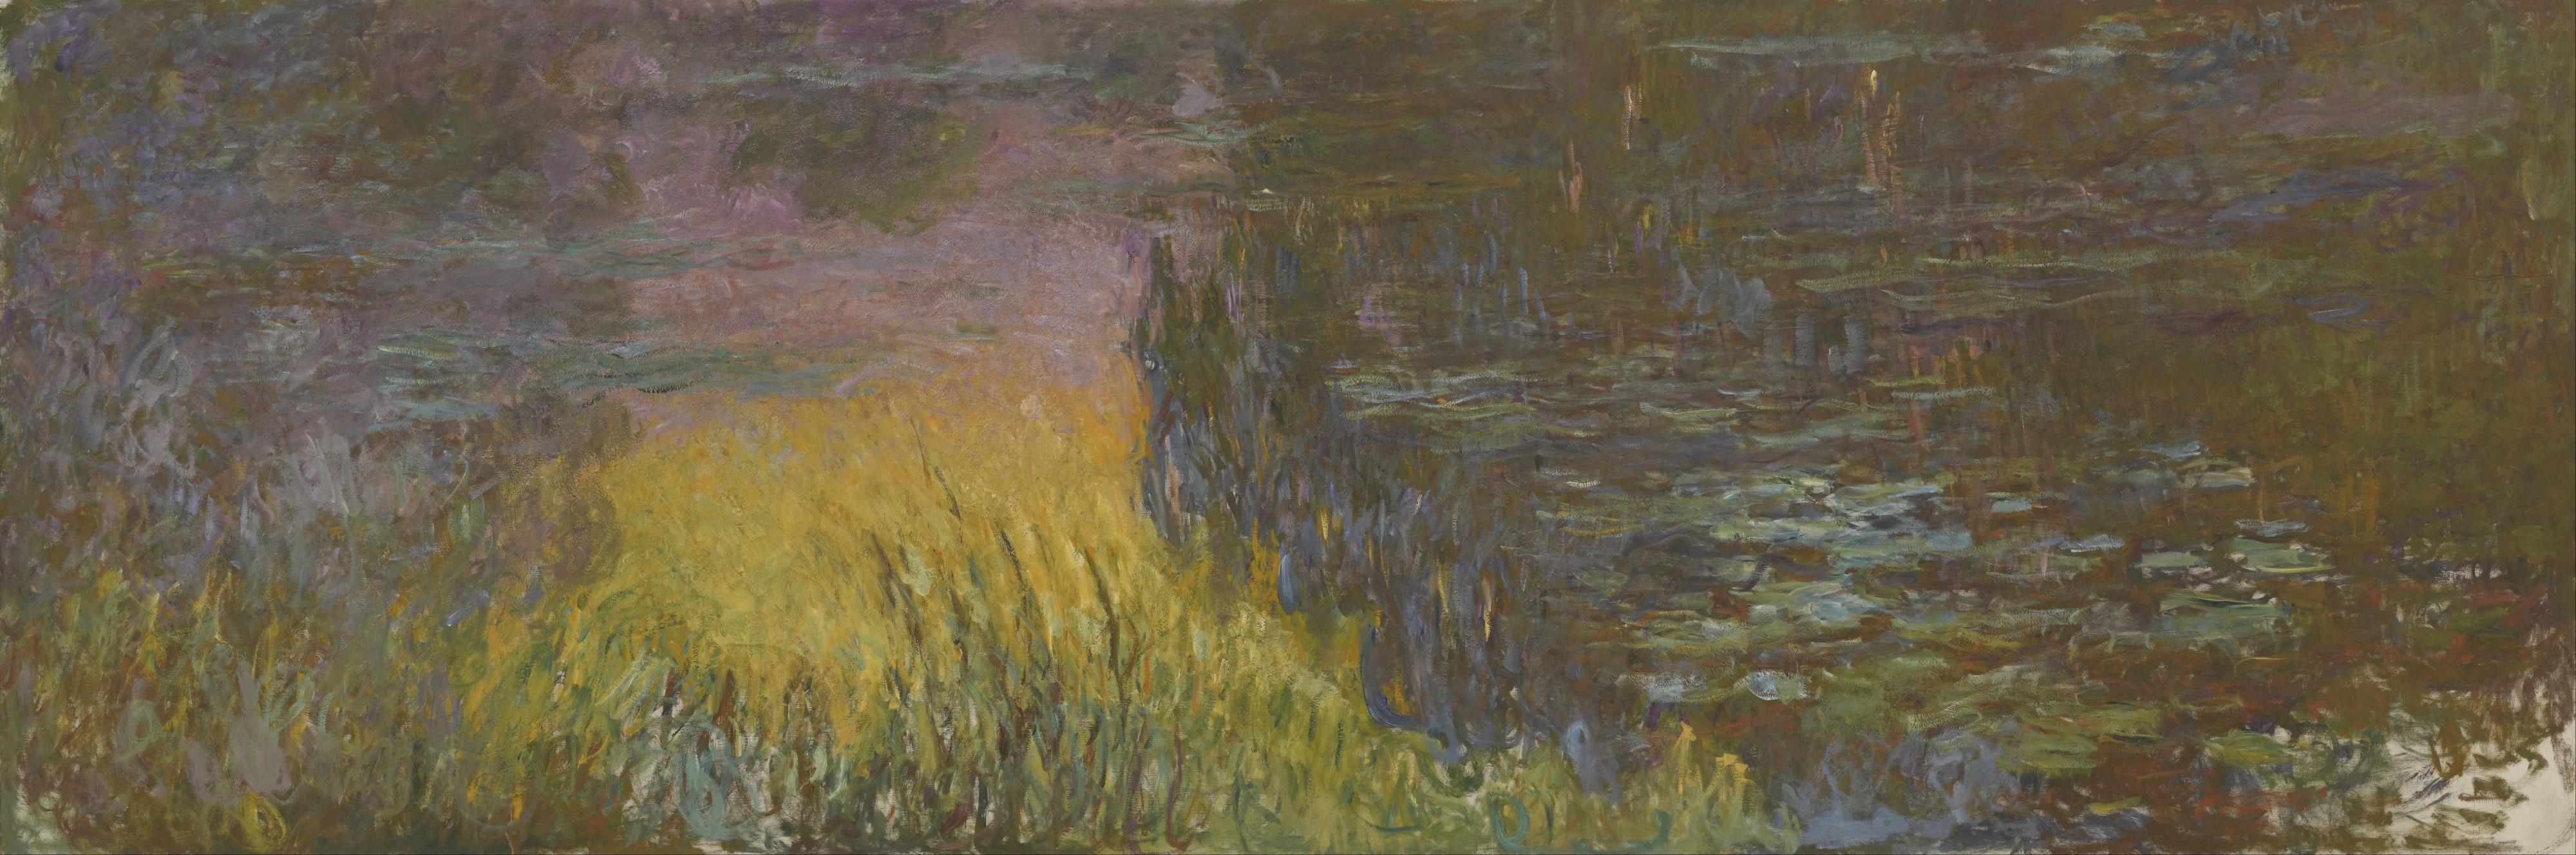 Claude Monet - The Water Lilies - Setting Sun - Google Art Project